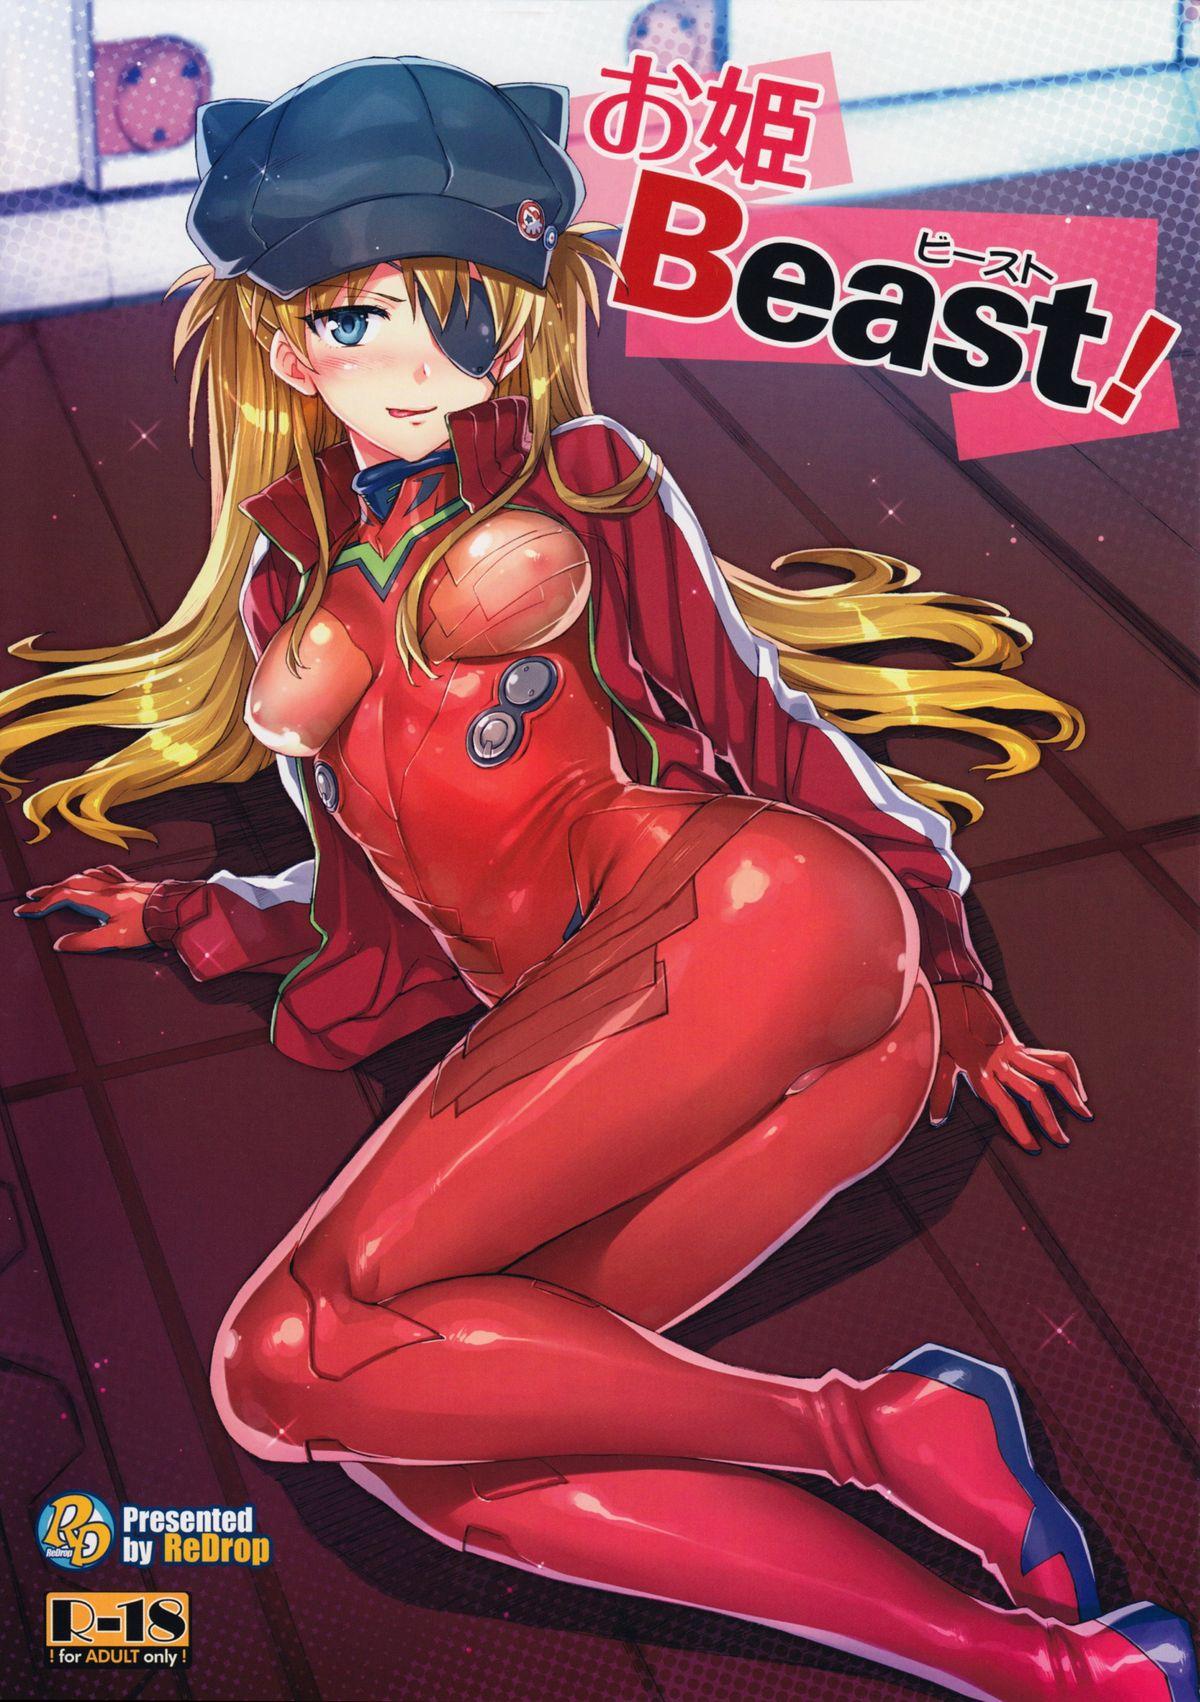 Speculum Ohime Beast! - Neon genesis evangelion Parody - Picture 1